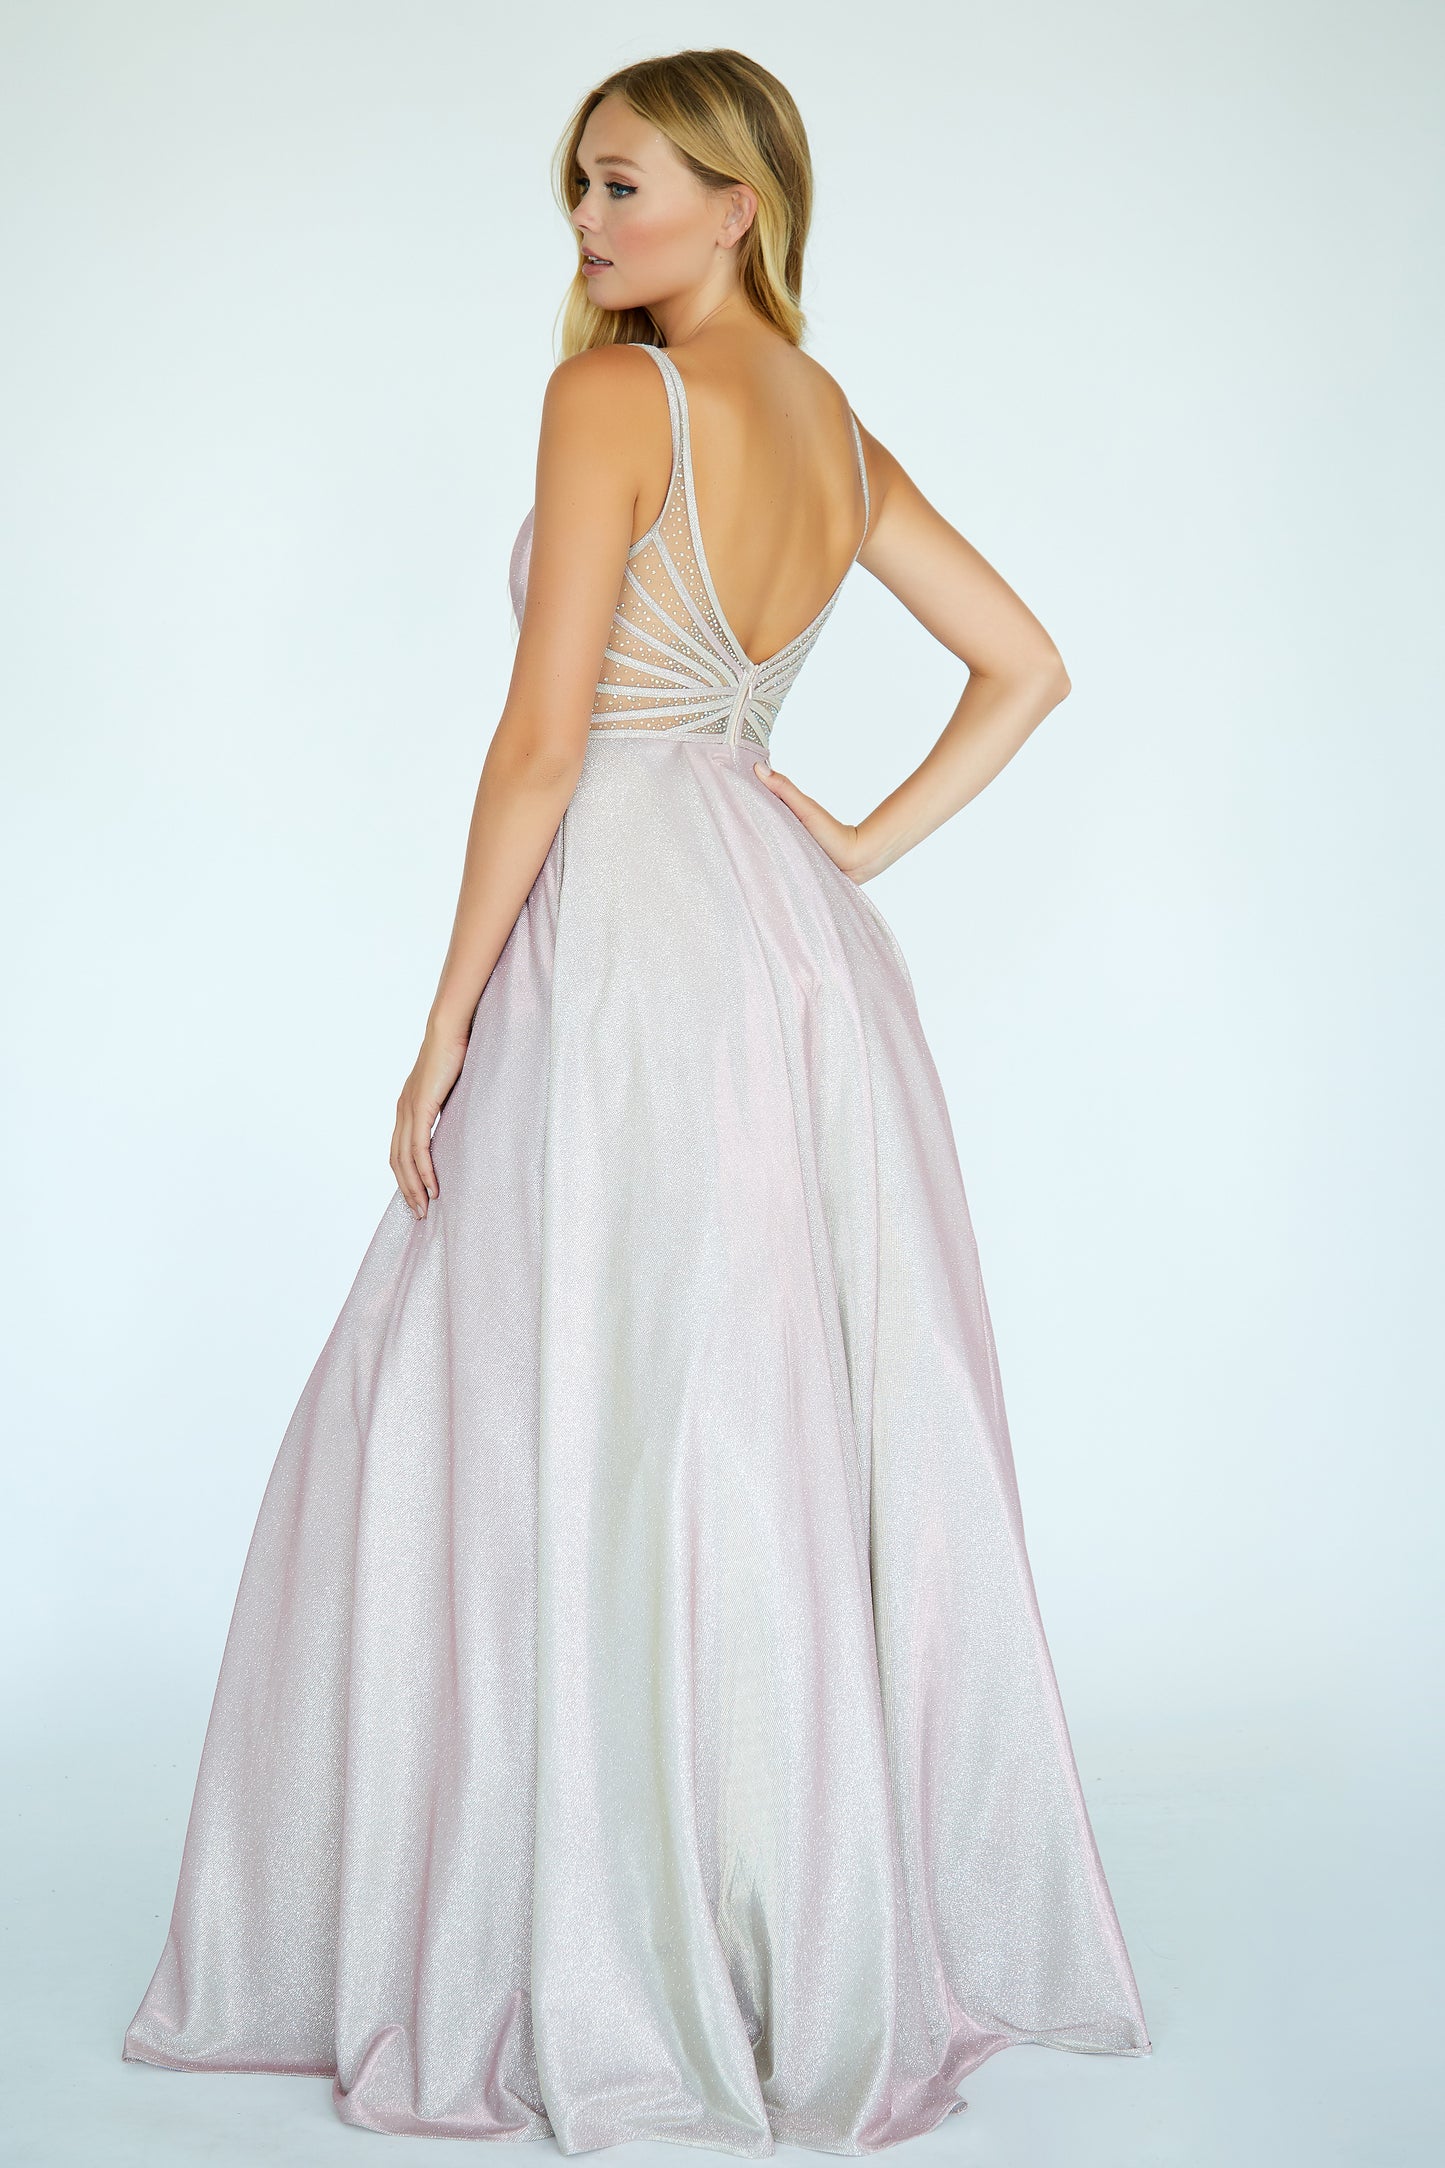 Jolene 20044 Size 6 Long Iridescent Glitter Ballgown Prom Dress Pockets Sheer Embellished